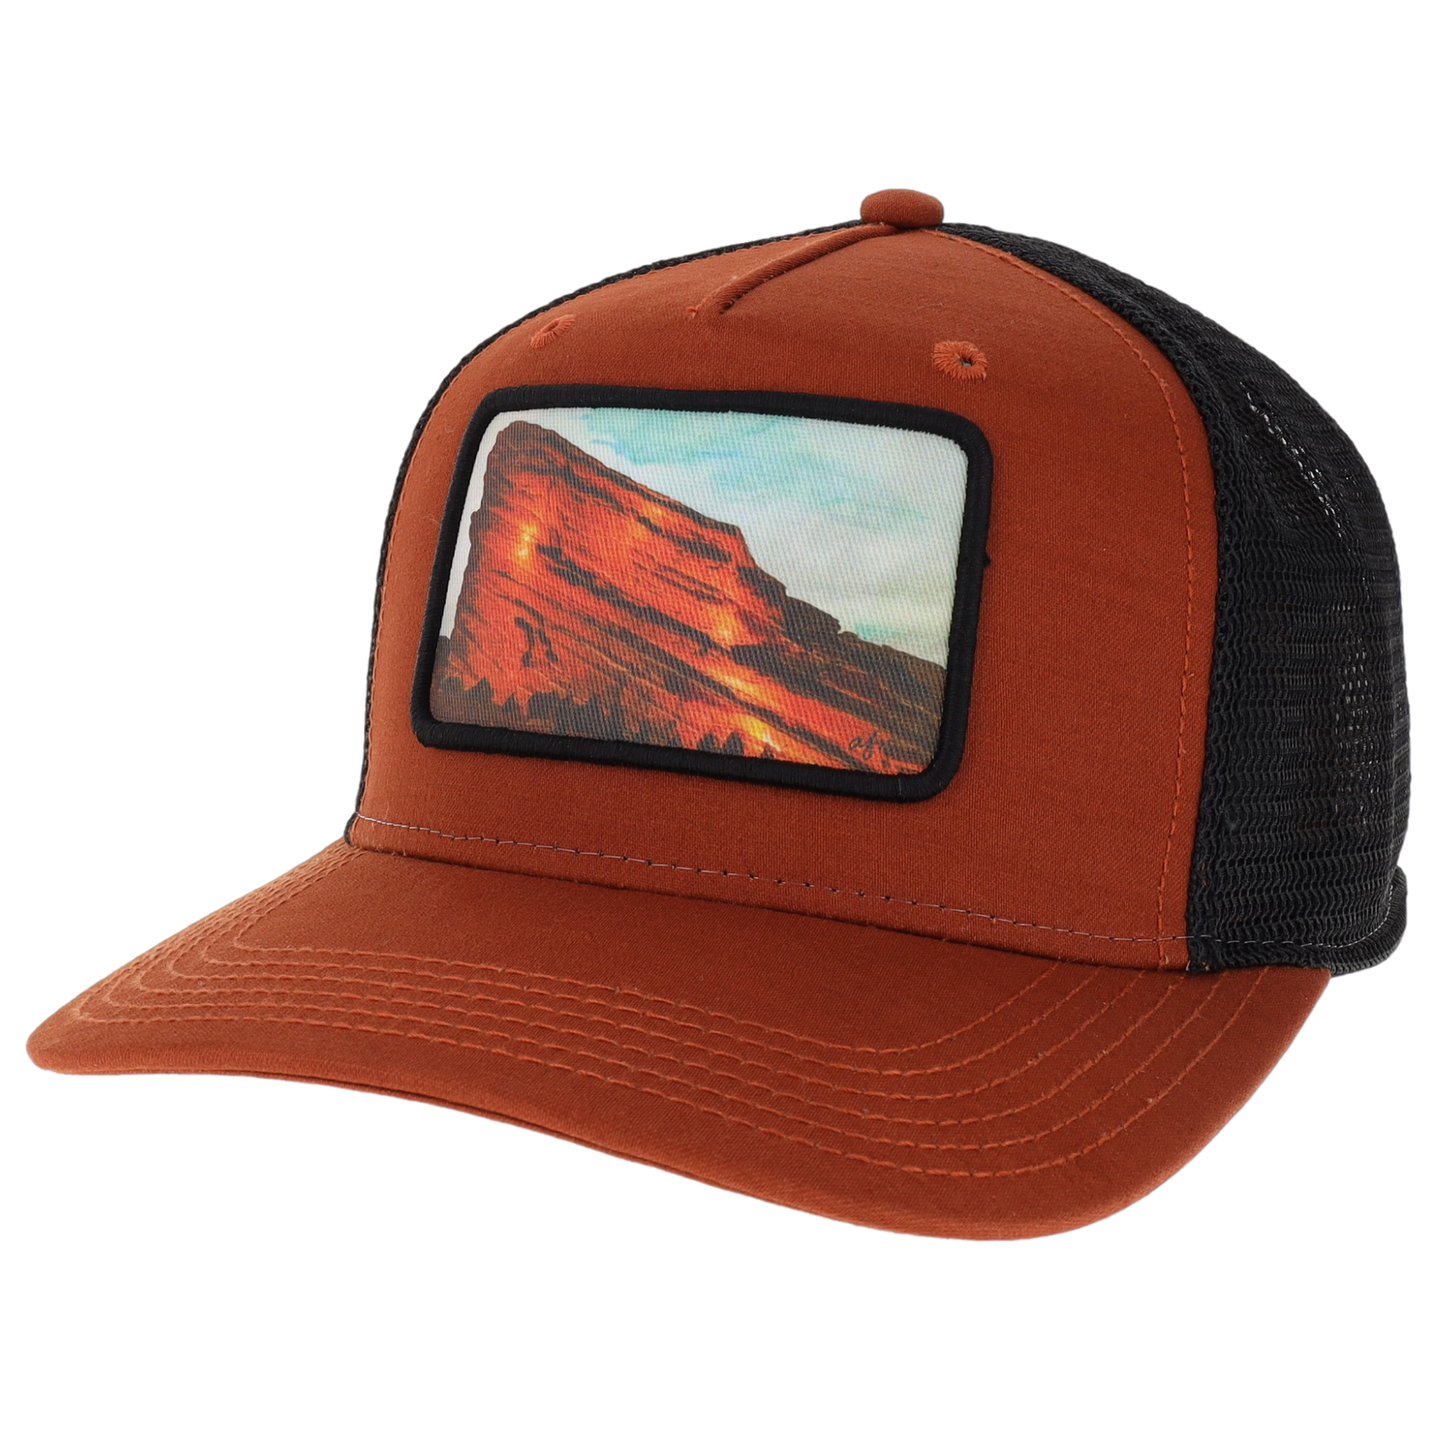 Red Rocks Roadie Trucker Hat in Copper Slub/Black